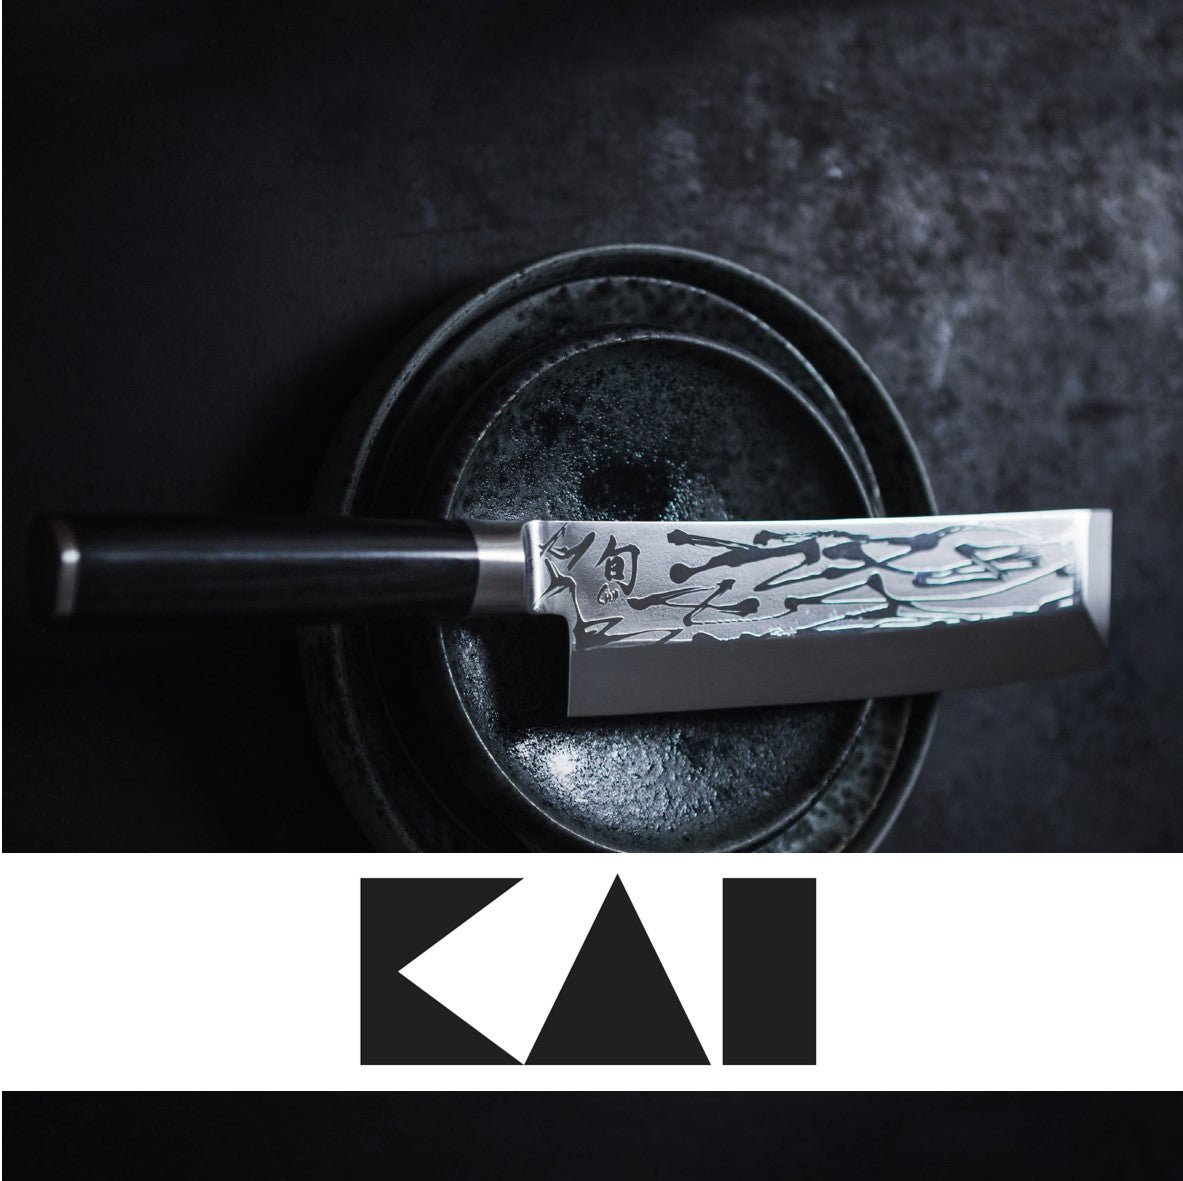 KAI Knives - The Cotswold Knife Company